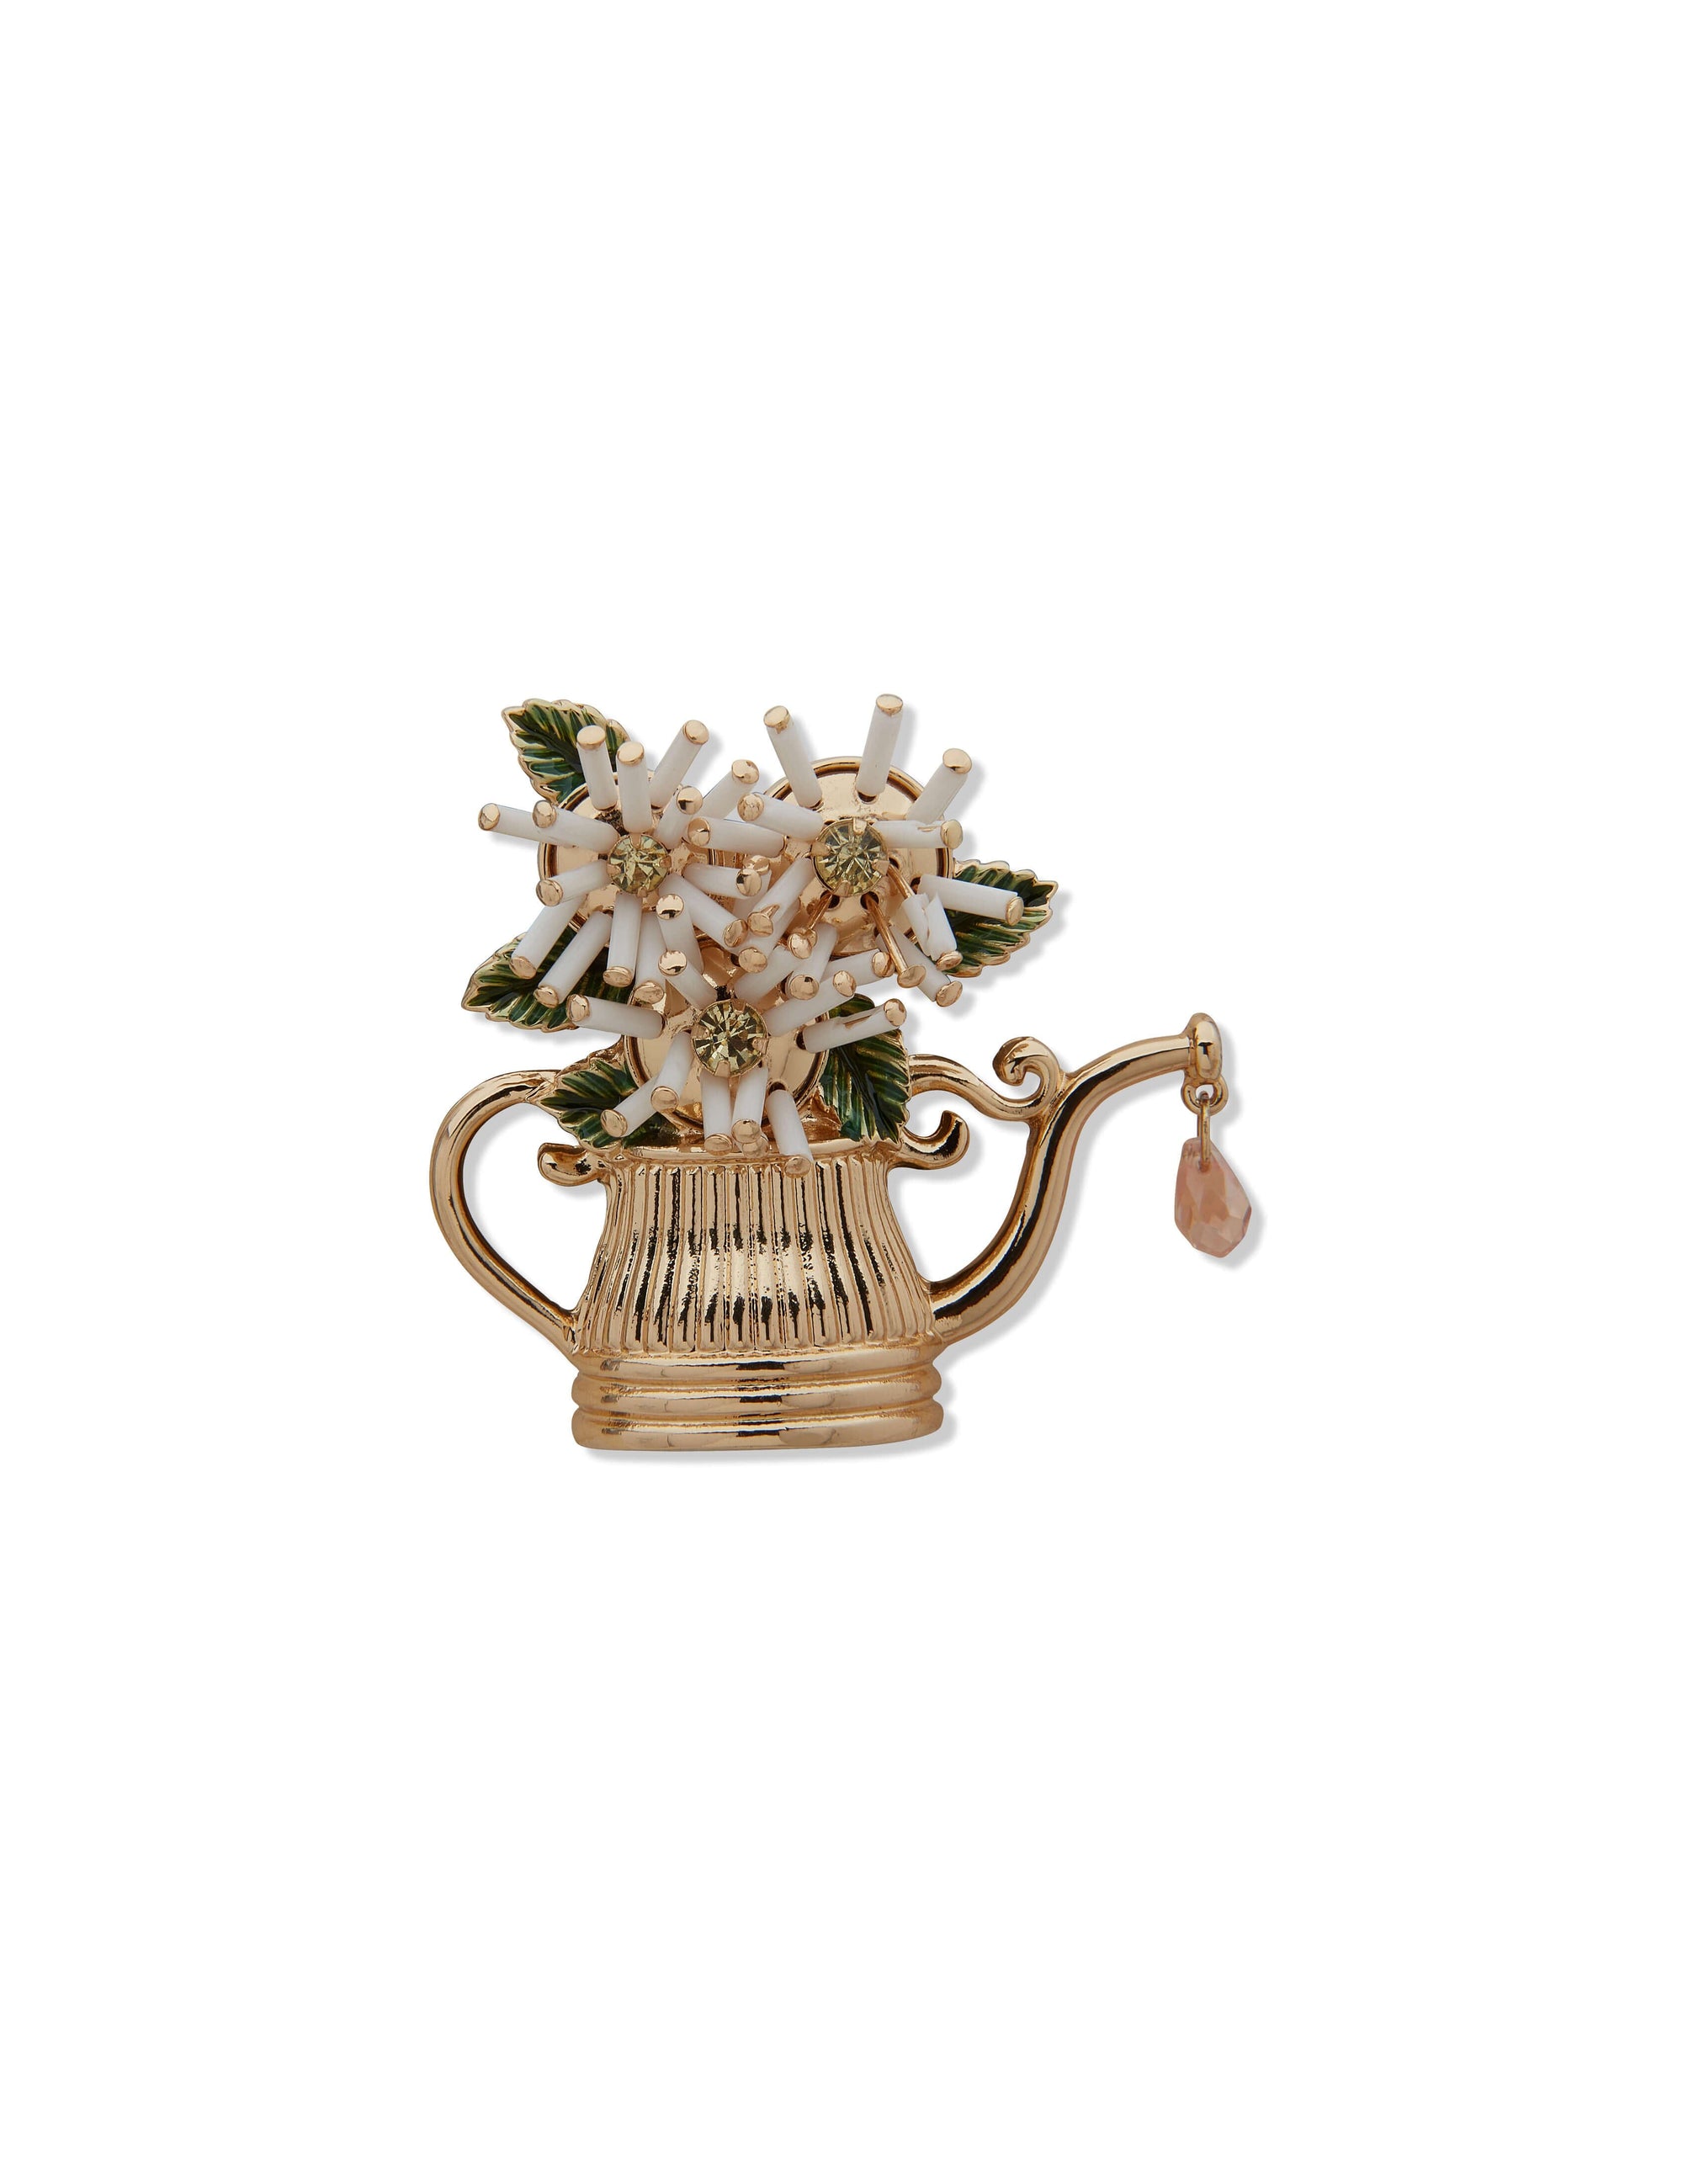 Anne Klein Gold Tone Flower Pot Brooch in Gift Box